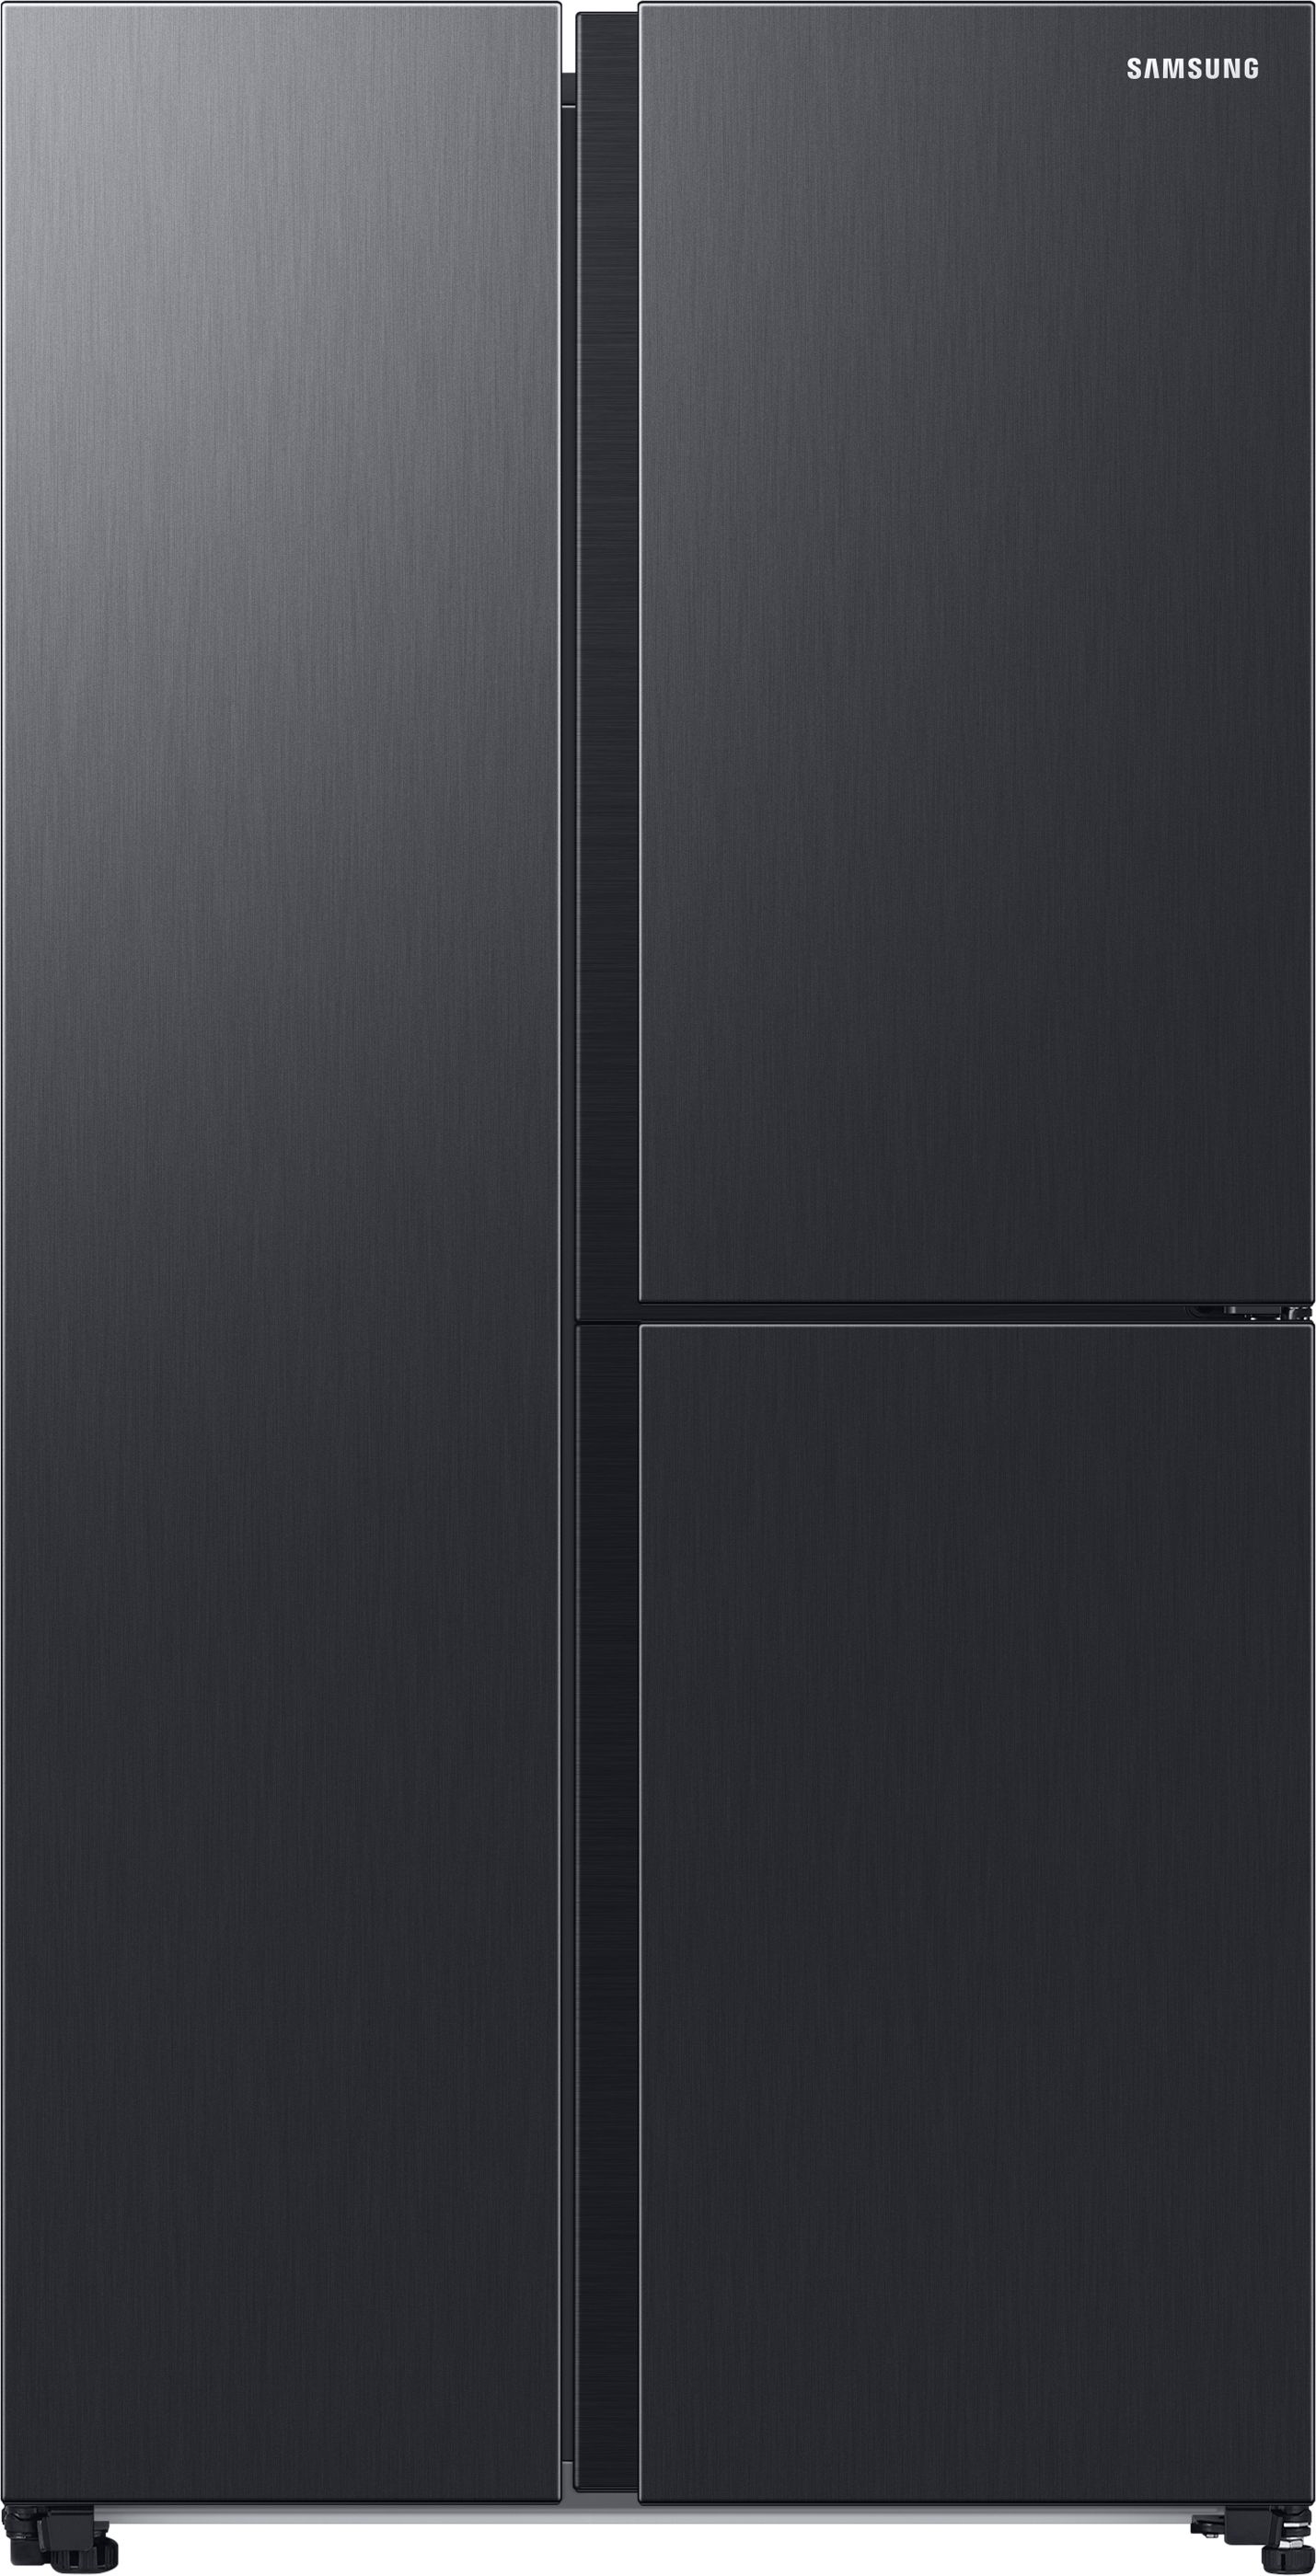 Samsung Series 9 Beverage Center RH69CG895DB1EU Wifi Connected Total No Frost American Fridge Freezer - Black - D Rated, Black